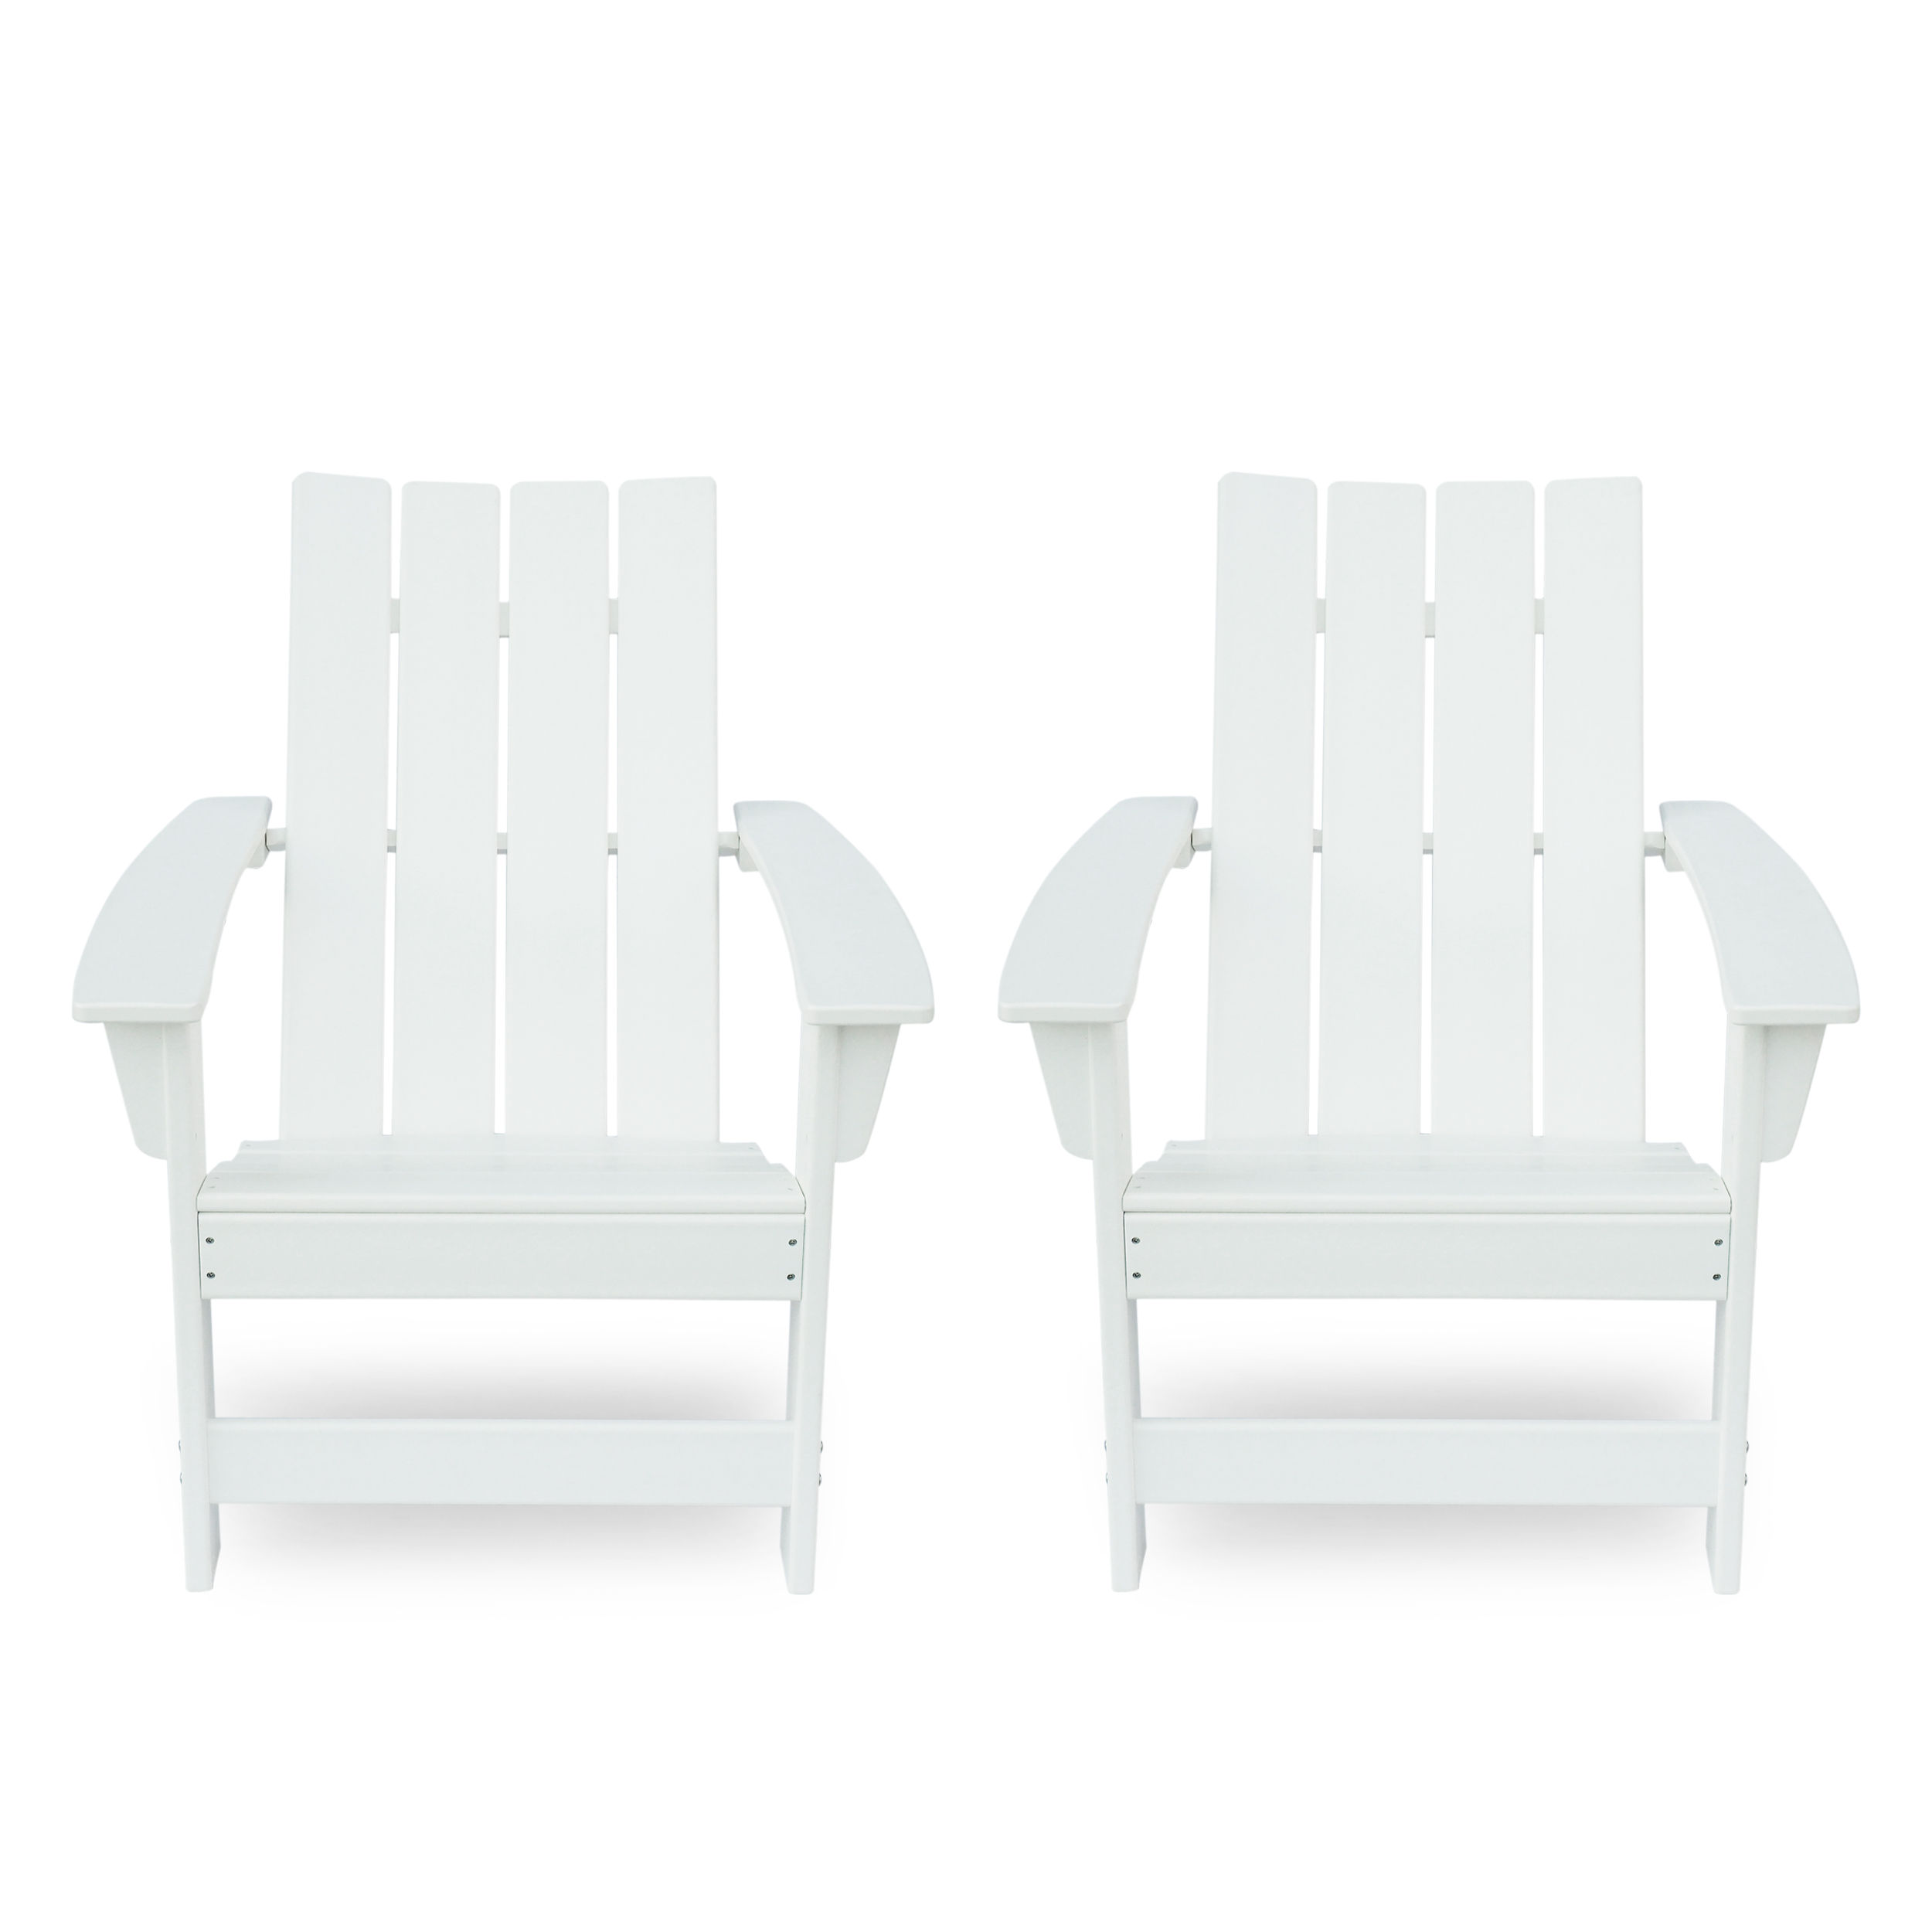 Panagiota Outdoor Contemporary Adirondack Chair, Set of 2, White - image 1 of 12